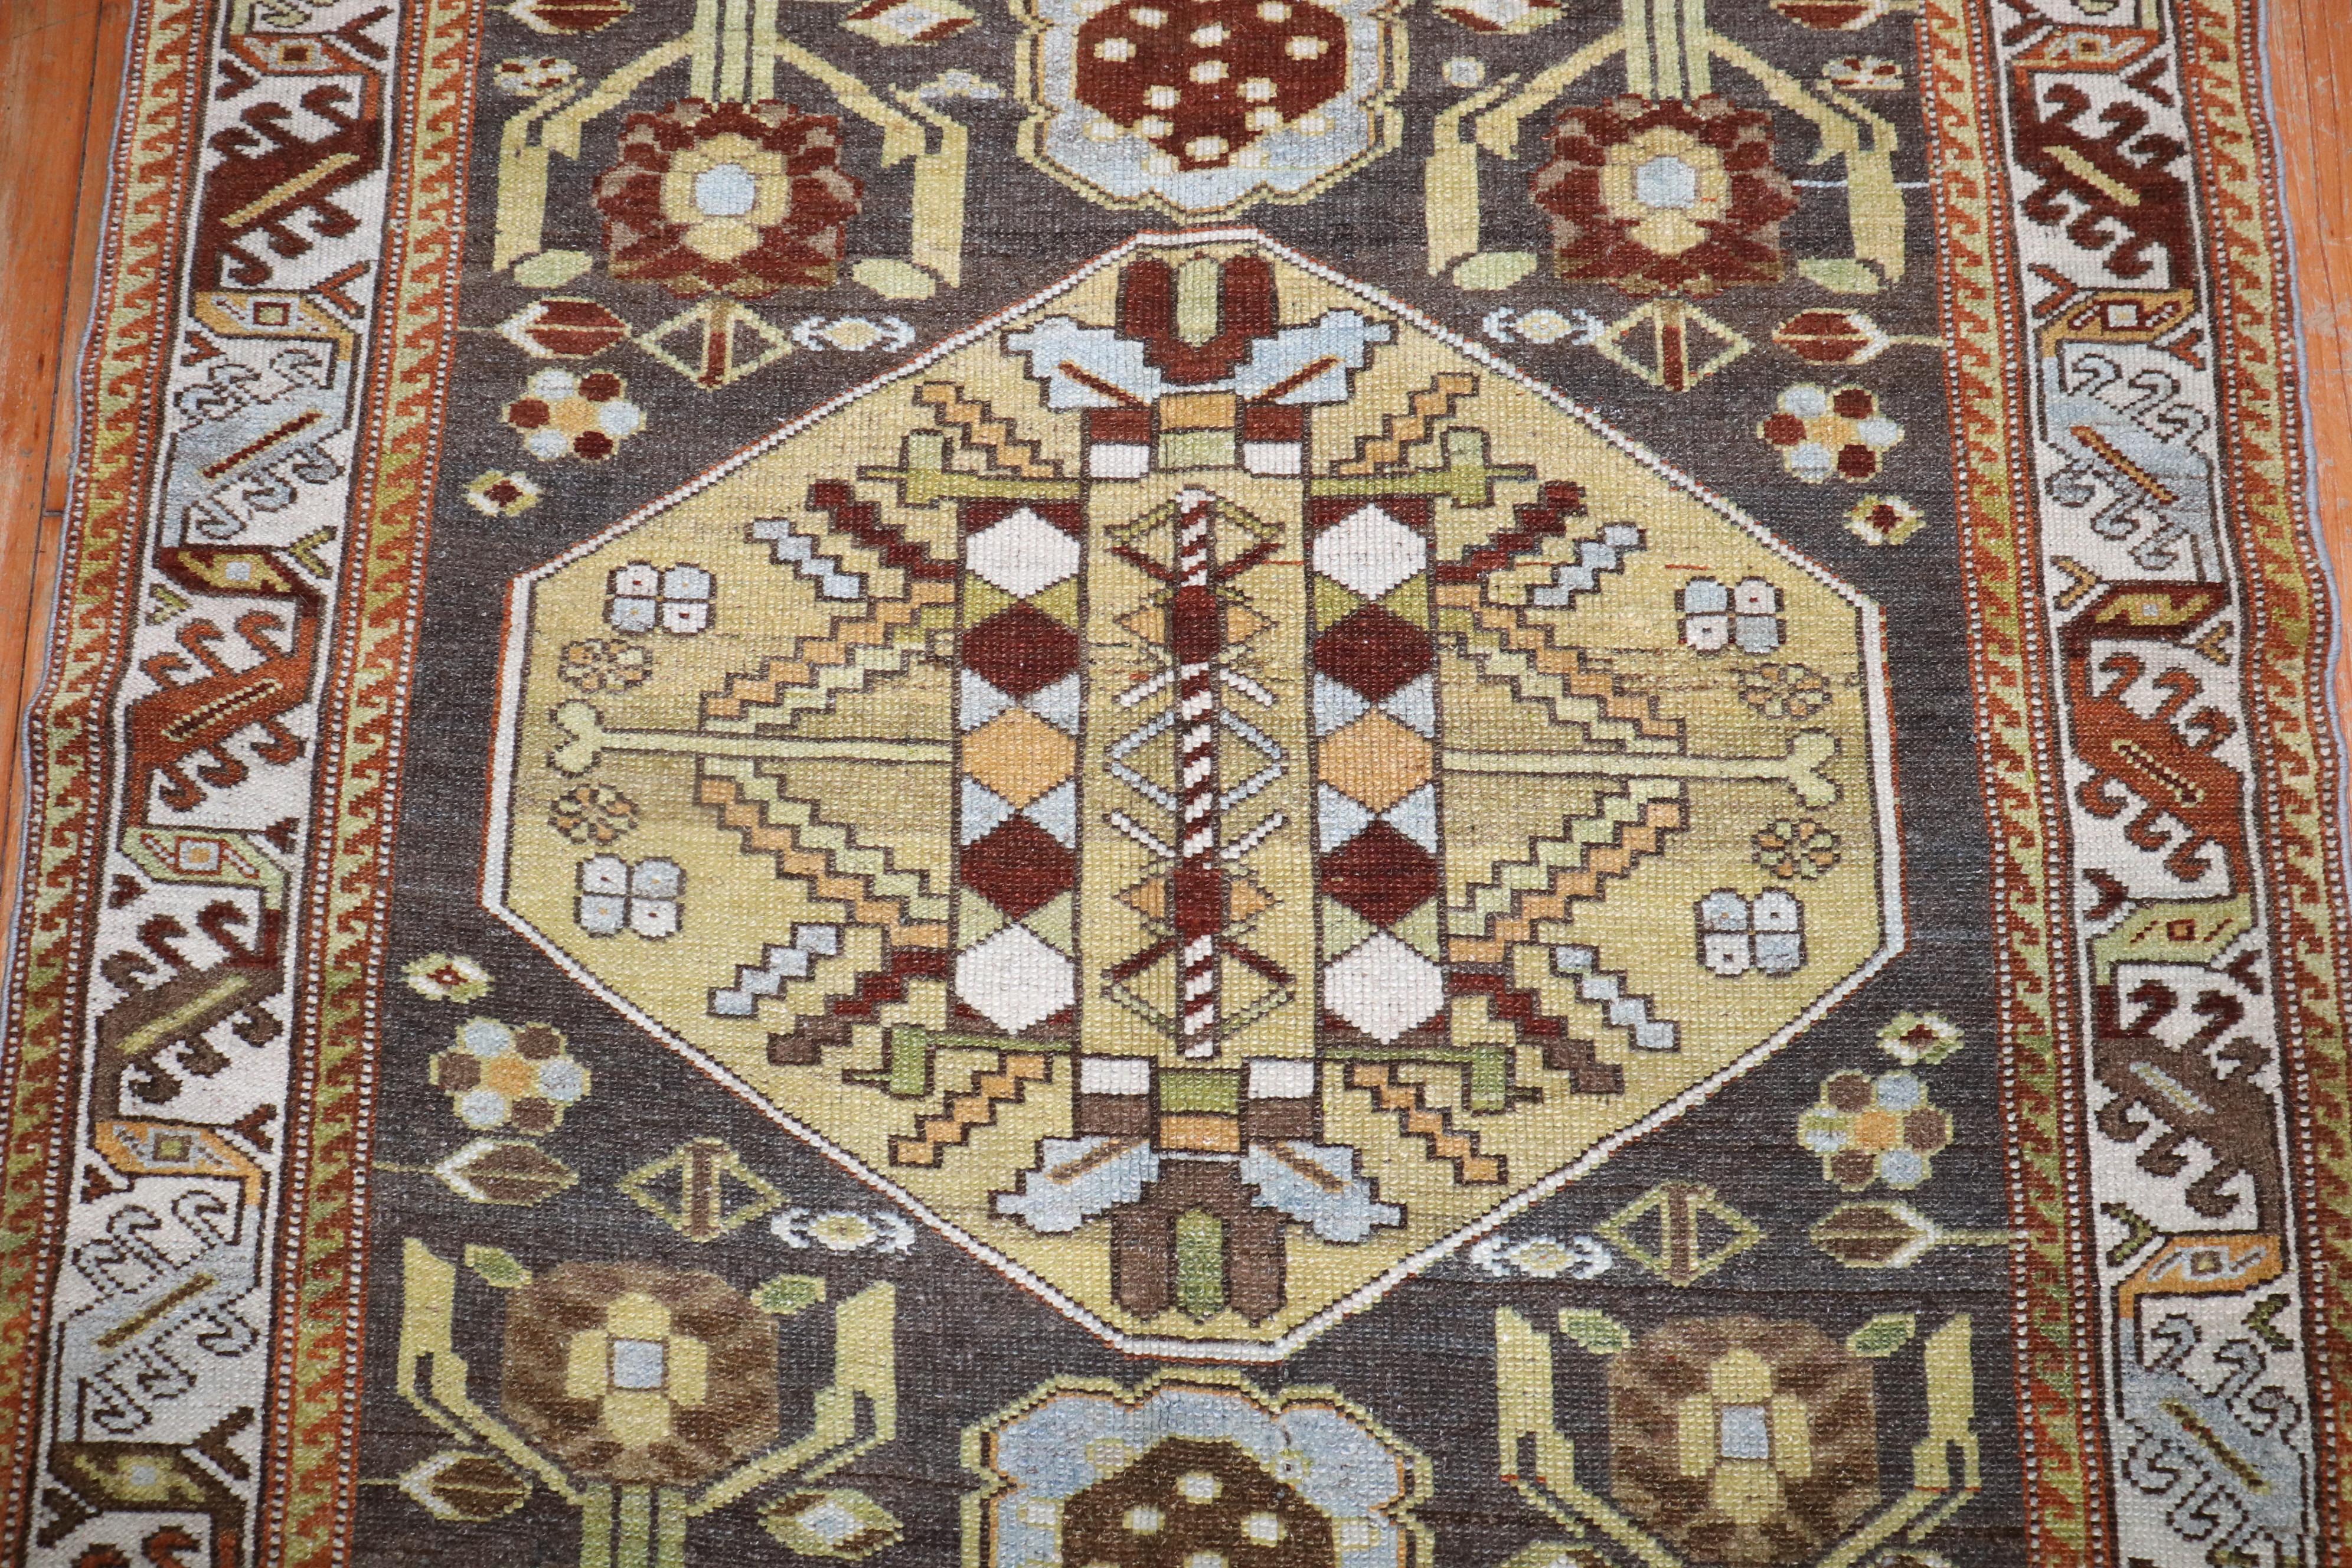 1930s Persian Bakhtiari scatter Size rug
rug no. j3248
Size 3' 9